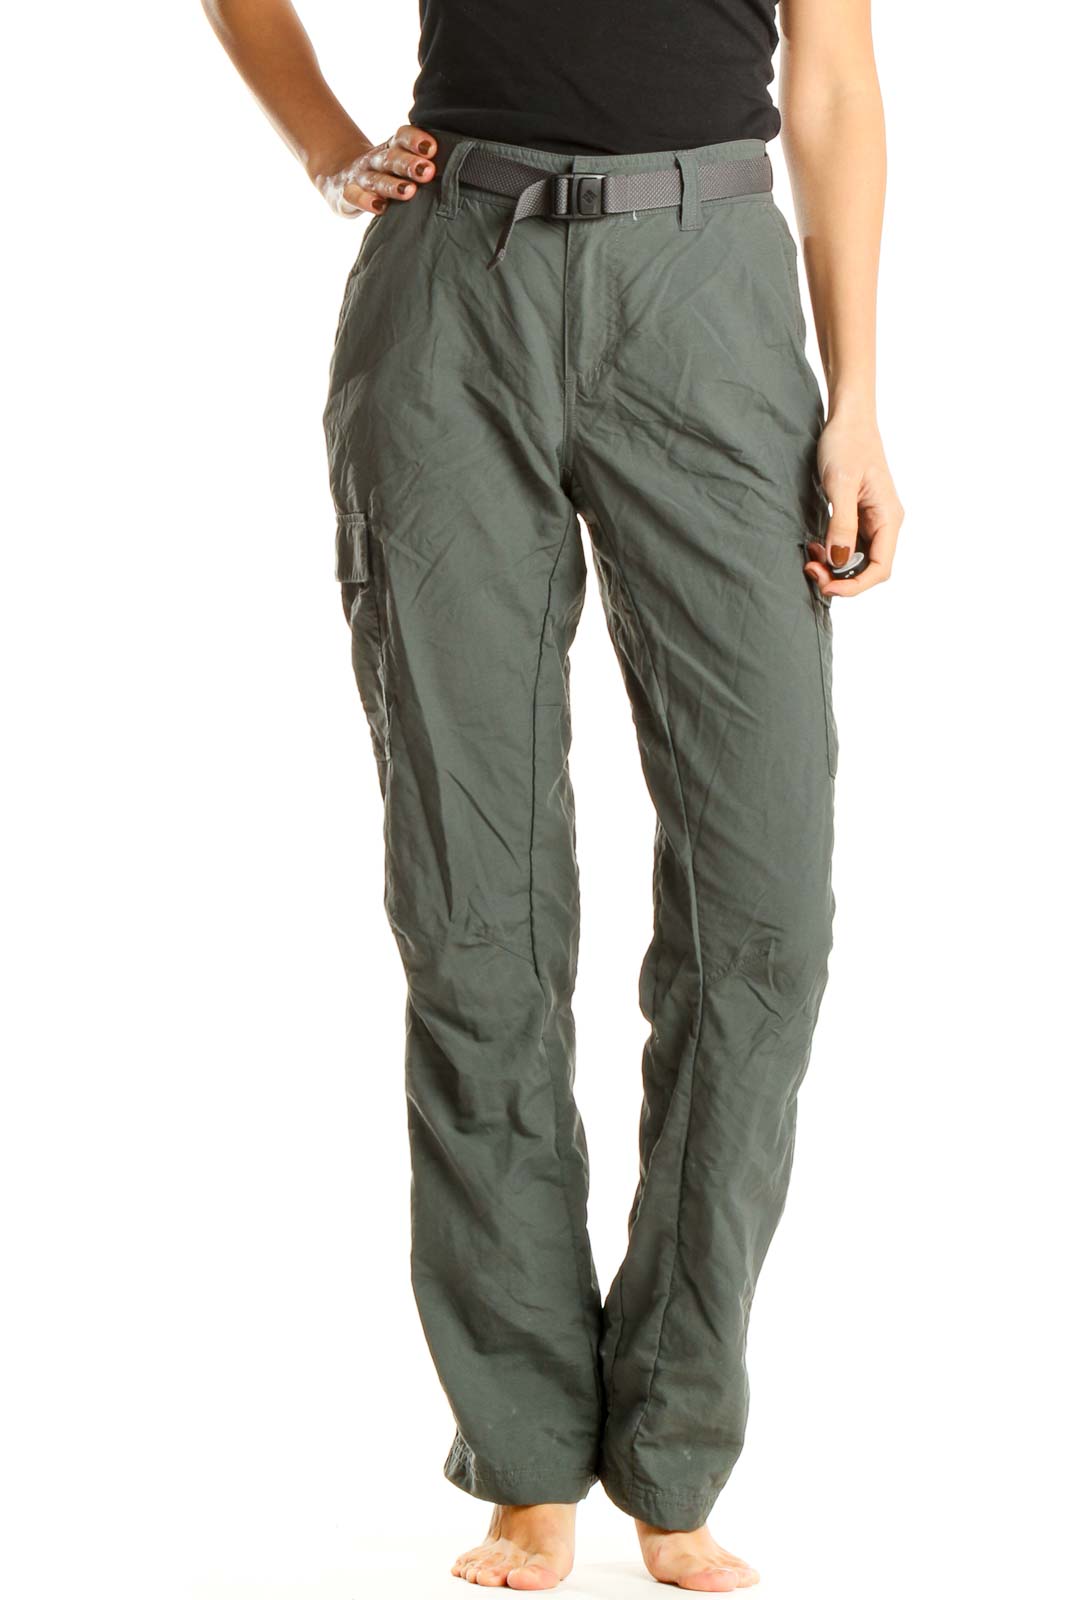 Gray Activewear Cargos Pants Front